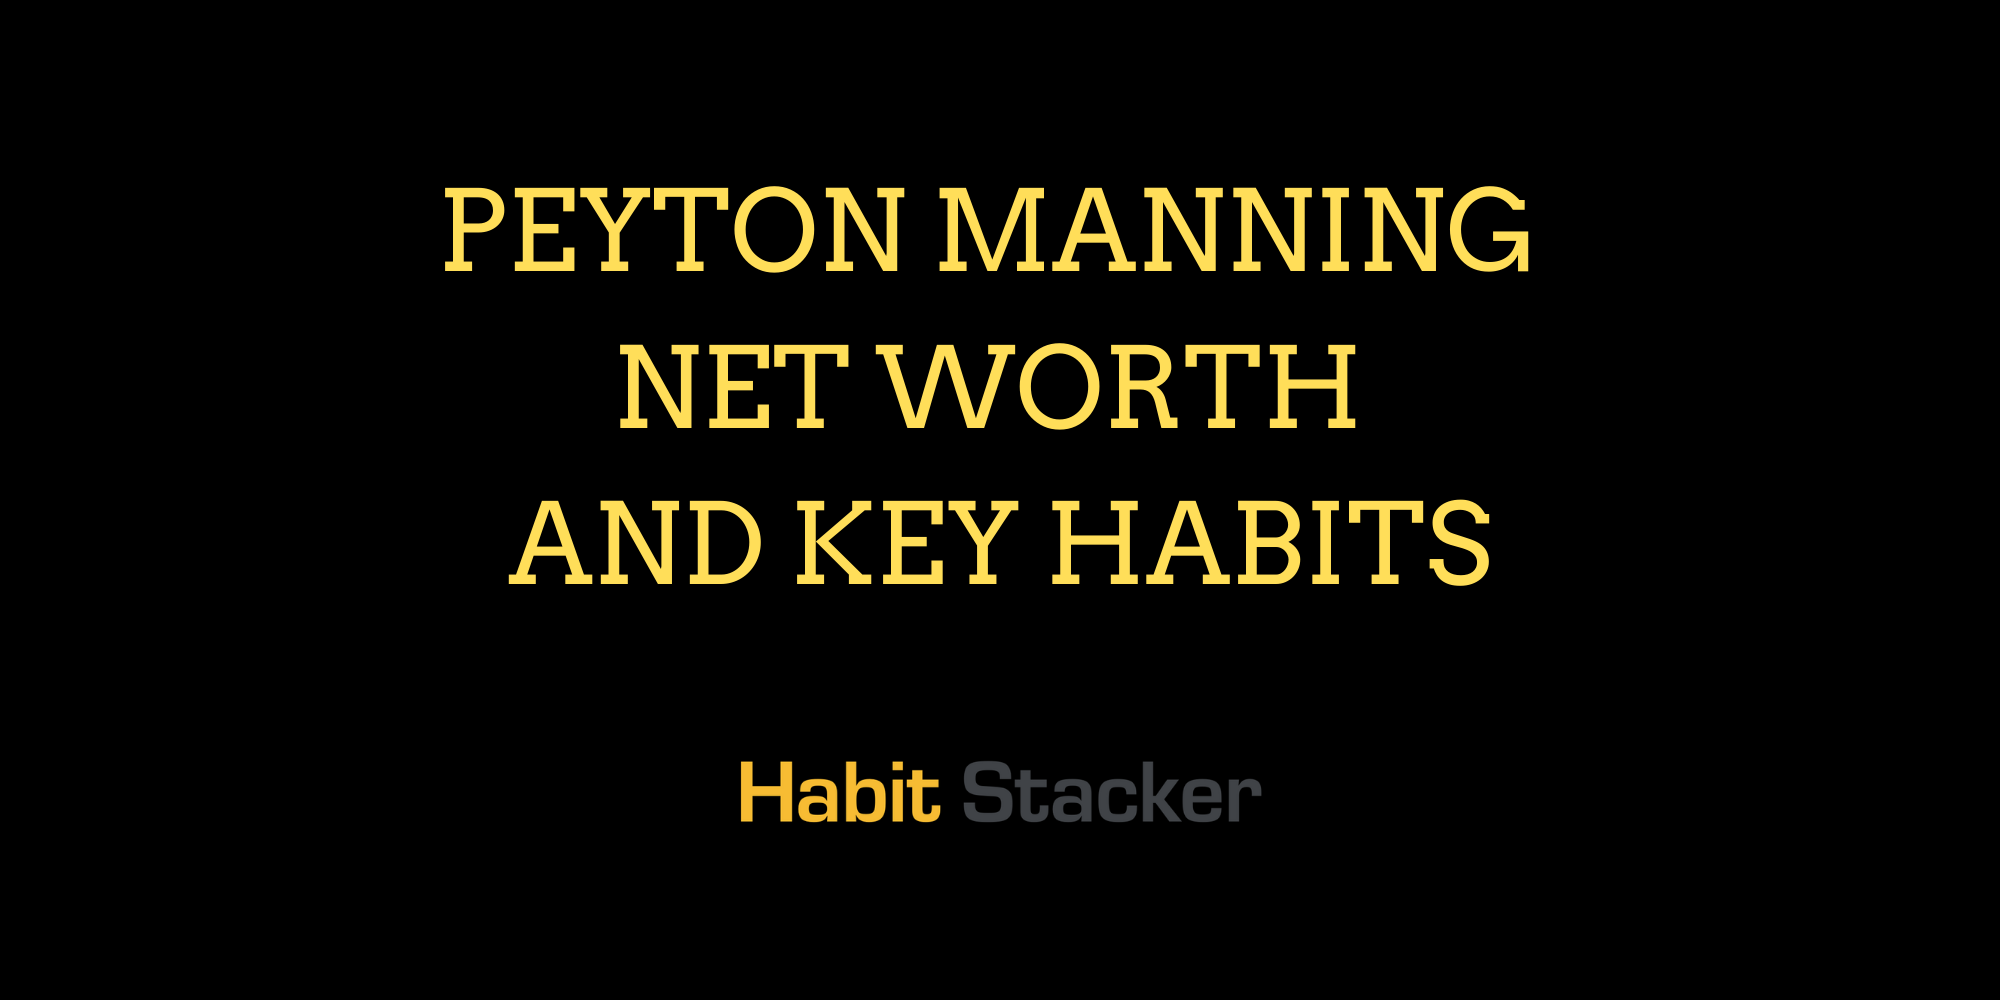 Peyton Manning Net Worth and Key Habits